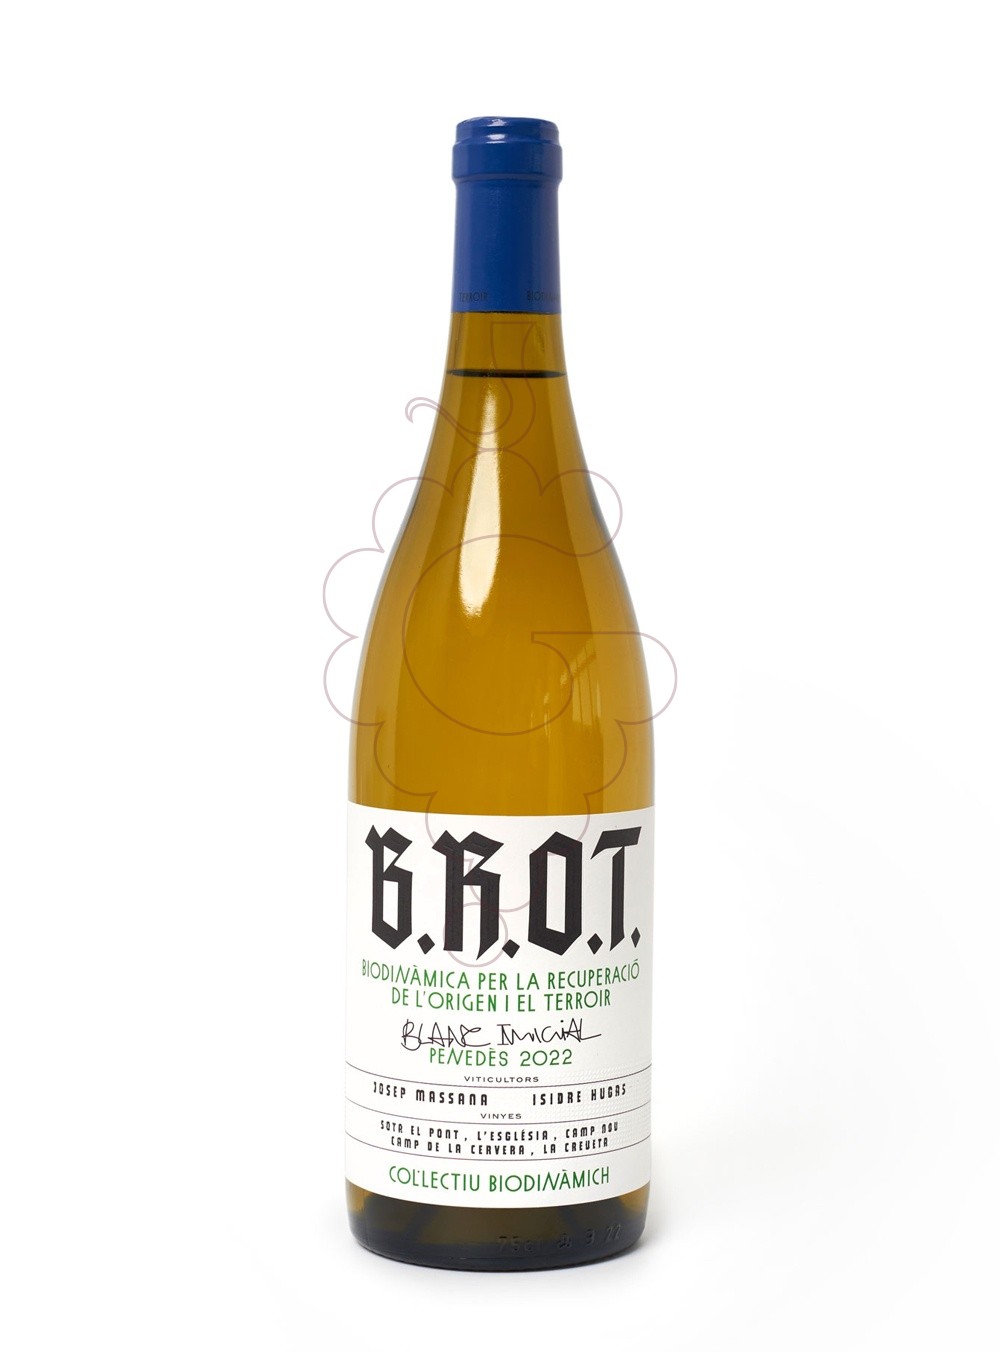 Photo B.R.O.T. Blanc Inicial vin blanc